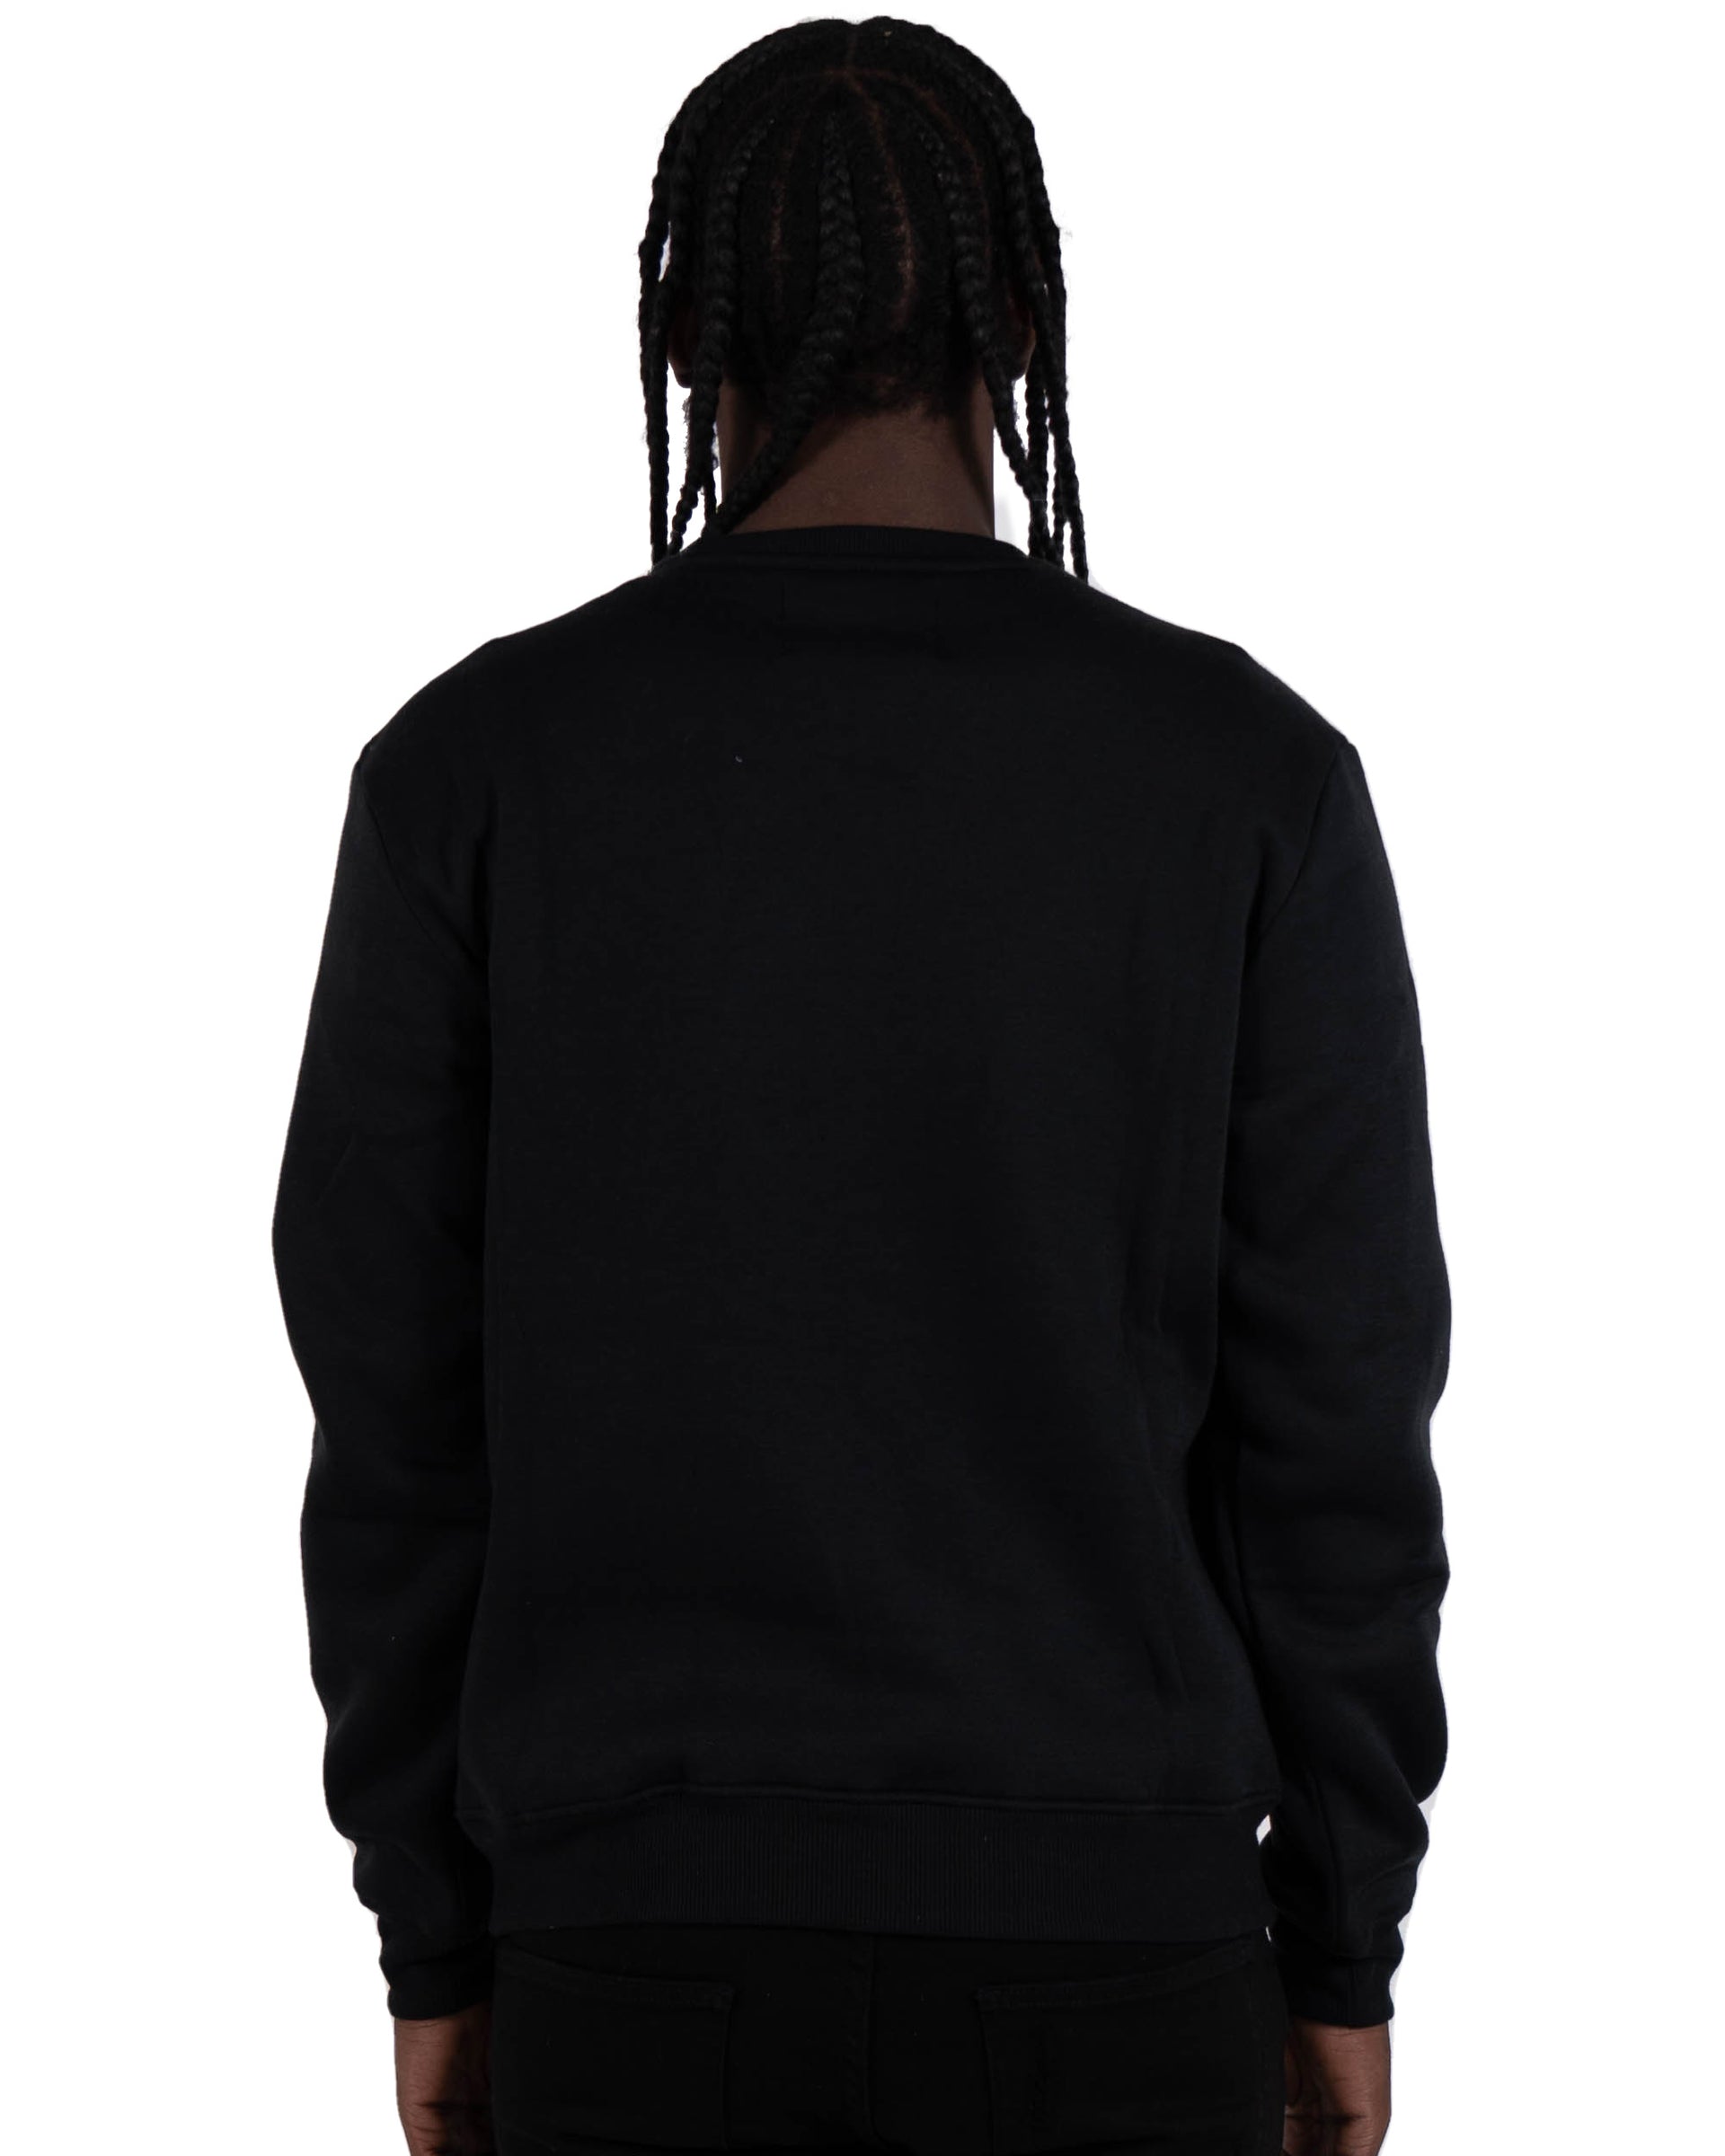 Men's "Trust No One" Graphic Embroidered Sweatshirt | Black